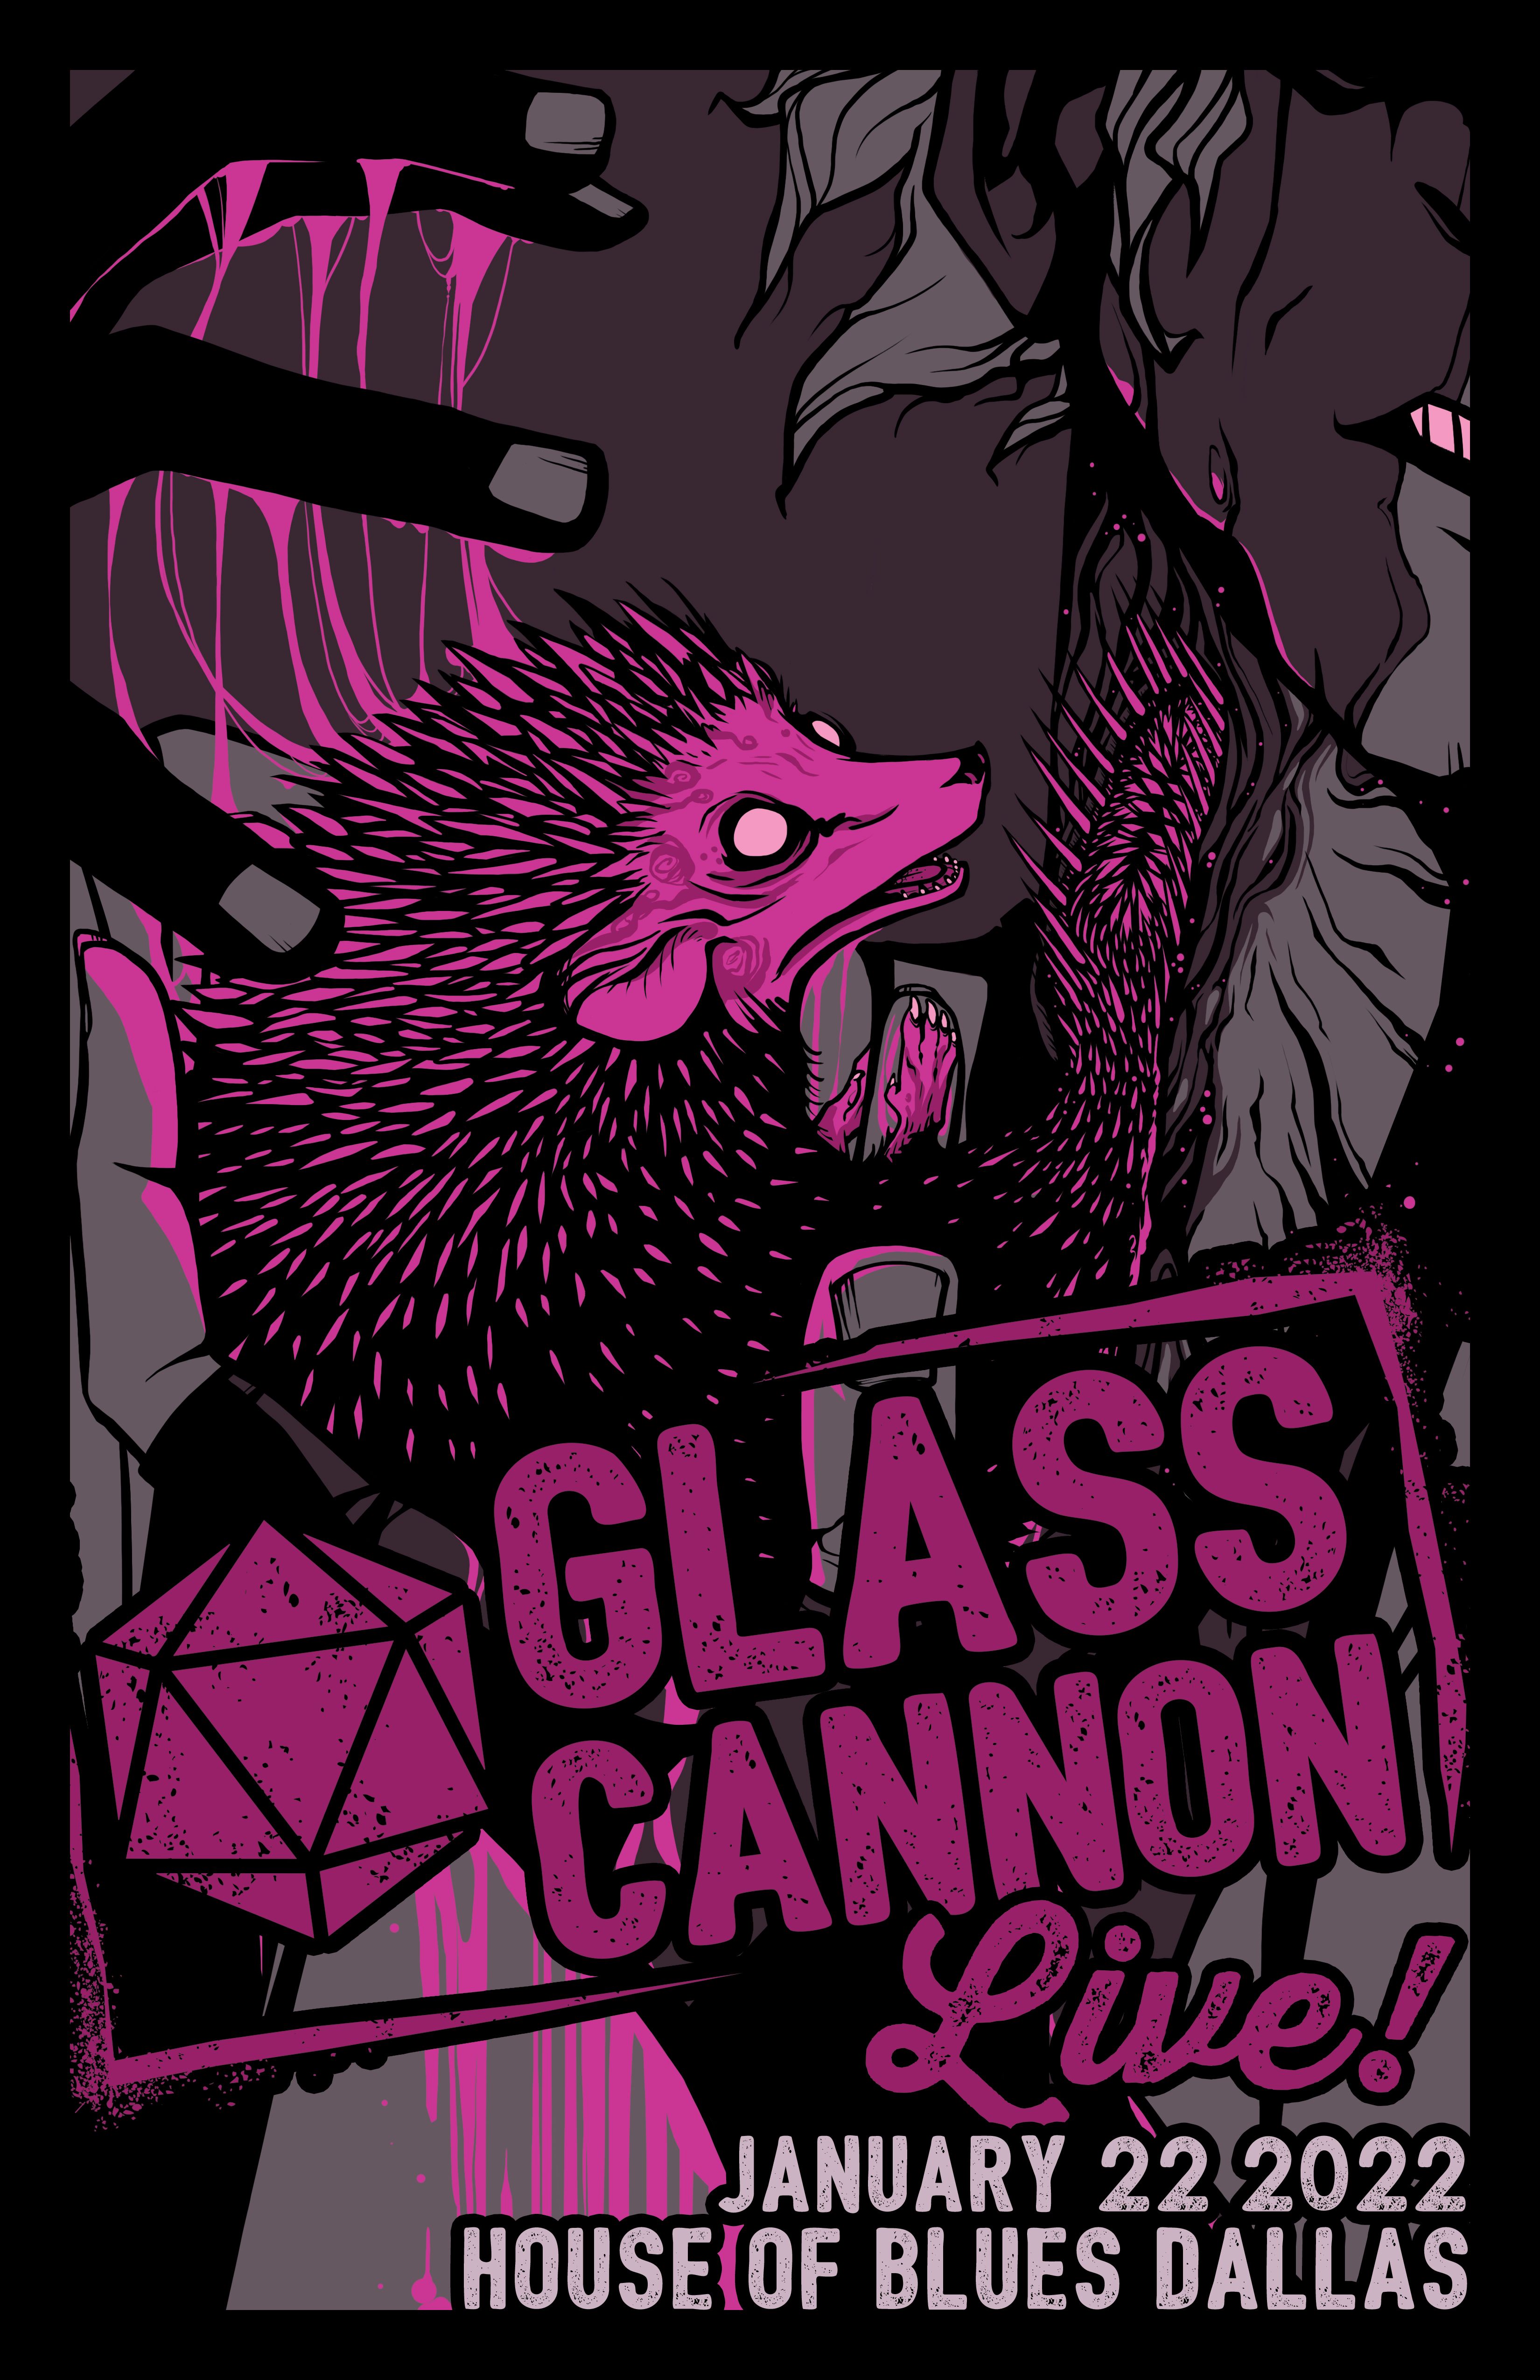 Glass Cannon Live! Columbus - Strange Aeons Session 40 : r